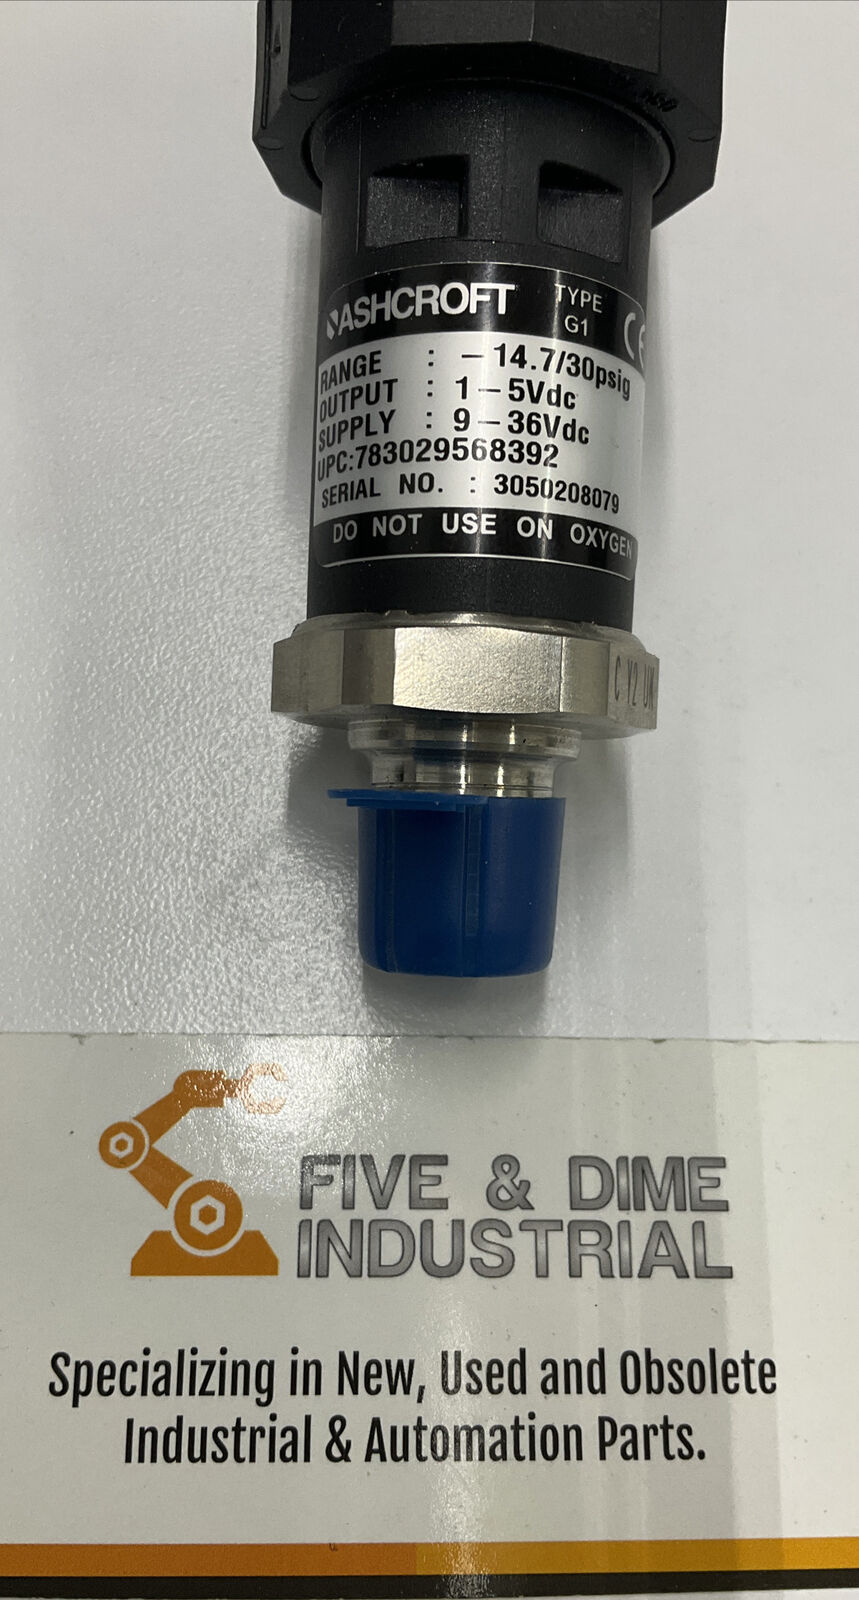 Ashcroft CY2UK New Pressure Switch B 12 GDM 14.7/30psig (BL251)